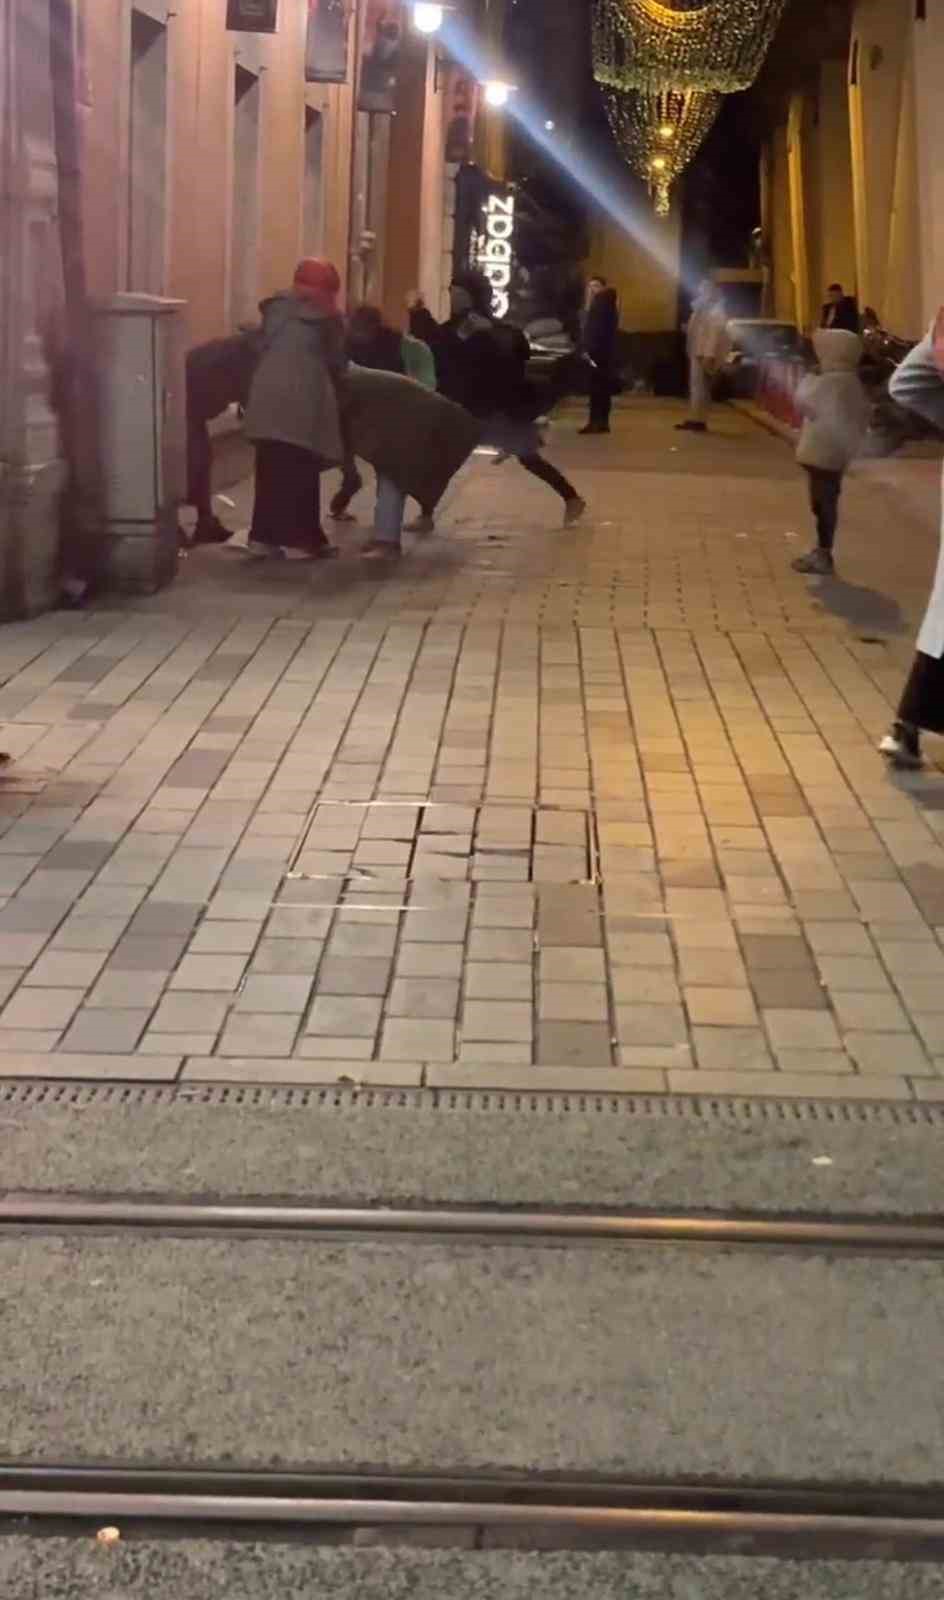 istanbulda ilginc kavgalar kamerada birbirlerinin saclarini birakmadilar vale ile taksici kavga etti 3 aJH5XjIY